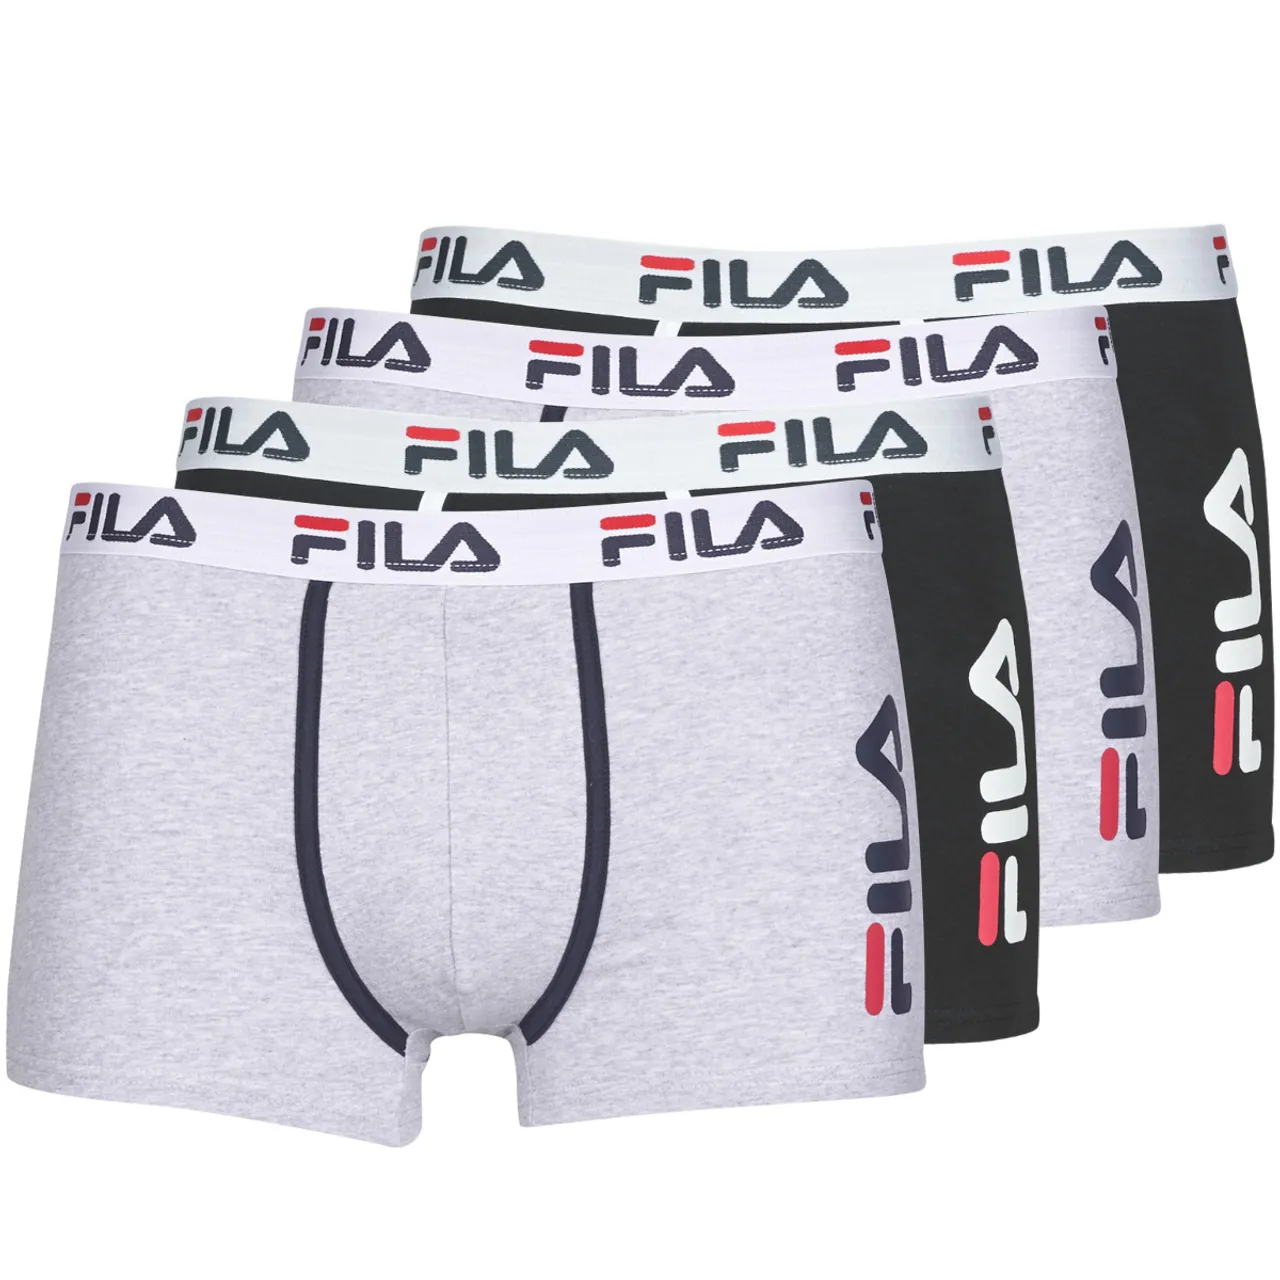 Fila  FI-1BCX4  men's Boxer shorts in Multicolour